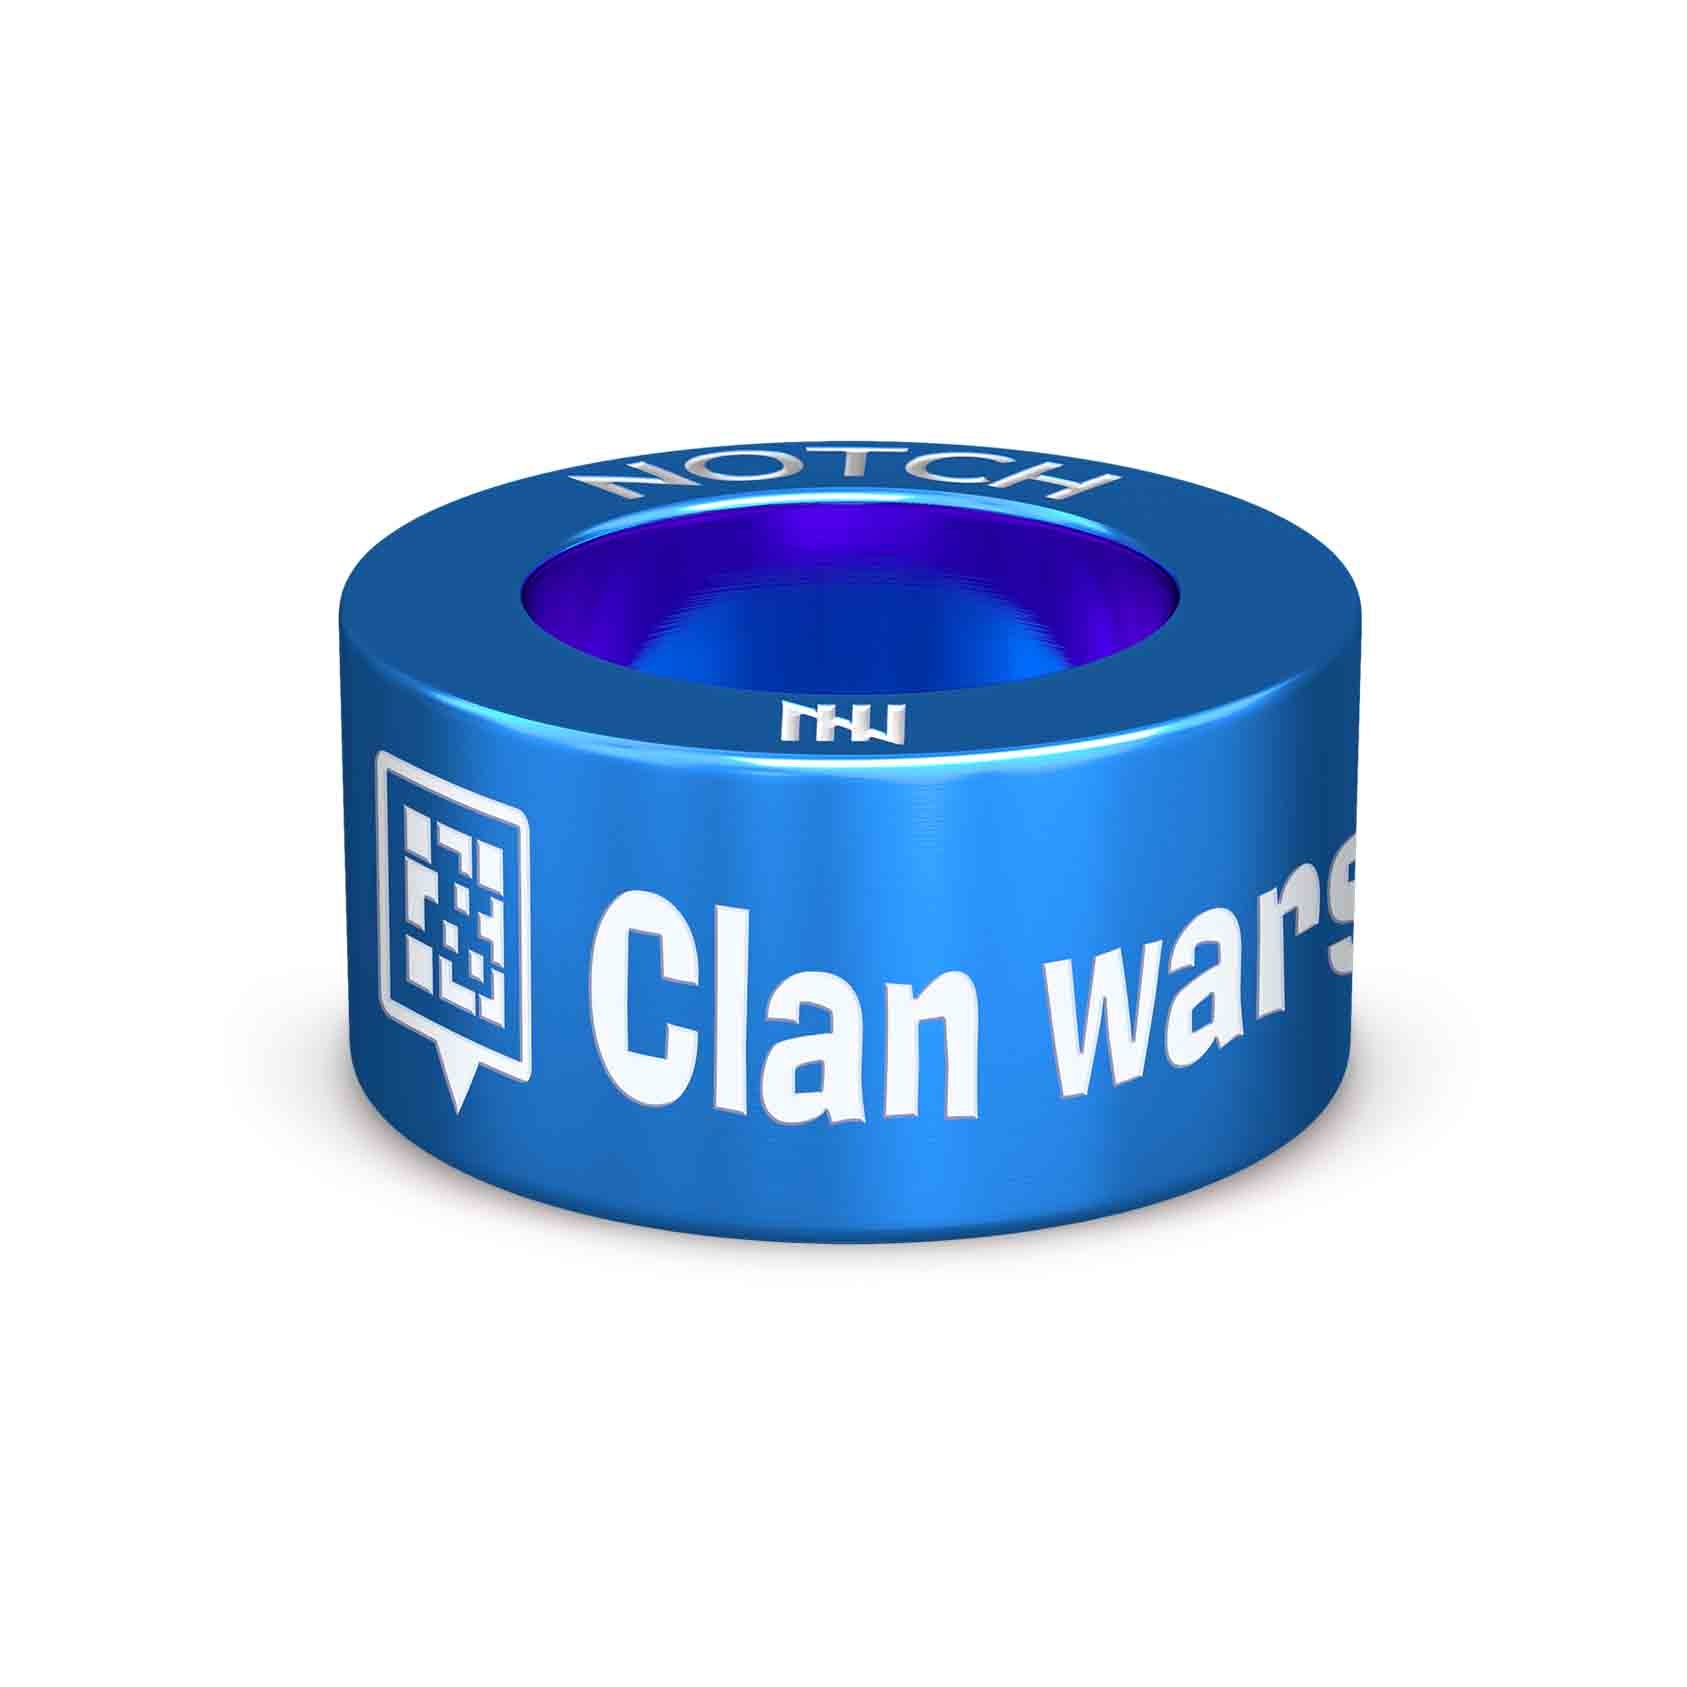 Clan wars player NOTCH Charm